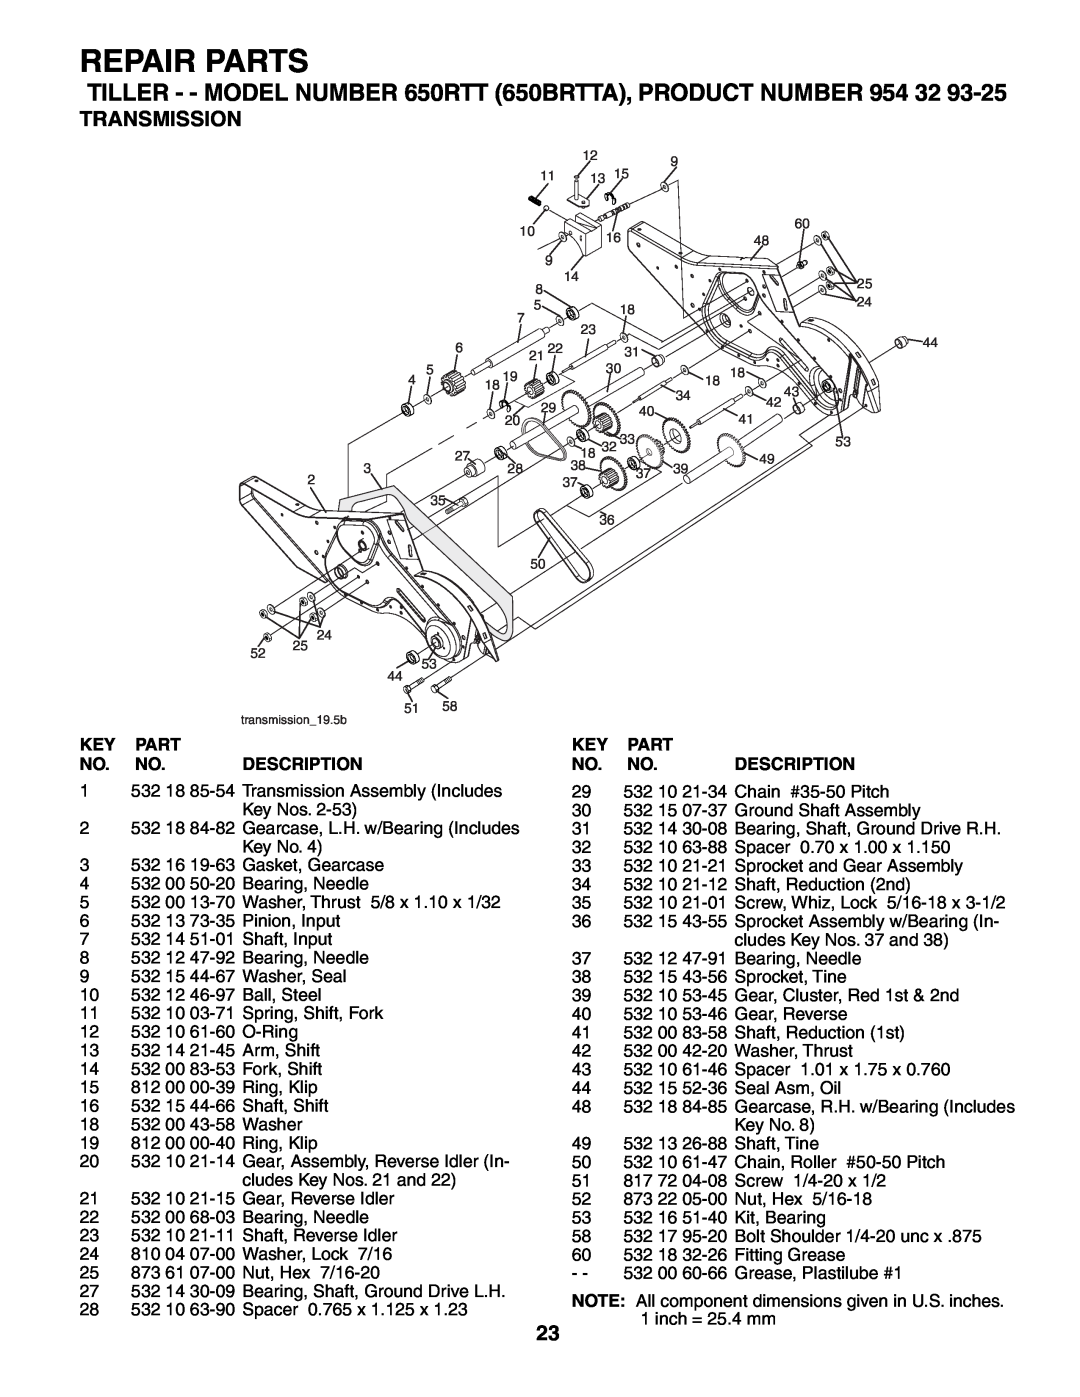 Husqvarna owner manual Repair Parts, TILLER - - MODEL NUMBER 650RTT 650BRTTA, PRODUCT NUMBER 954, Transmission 